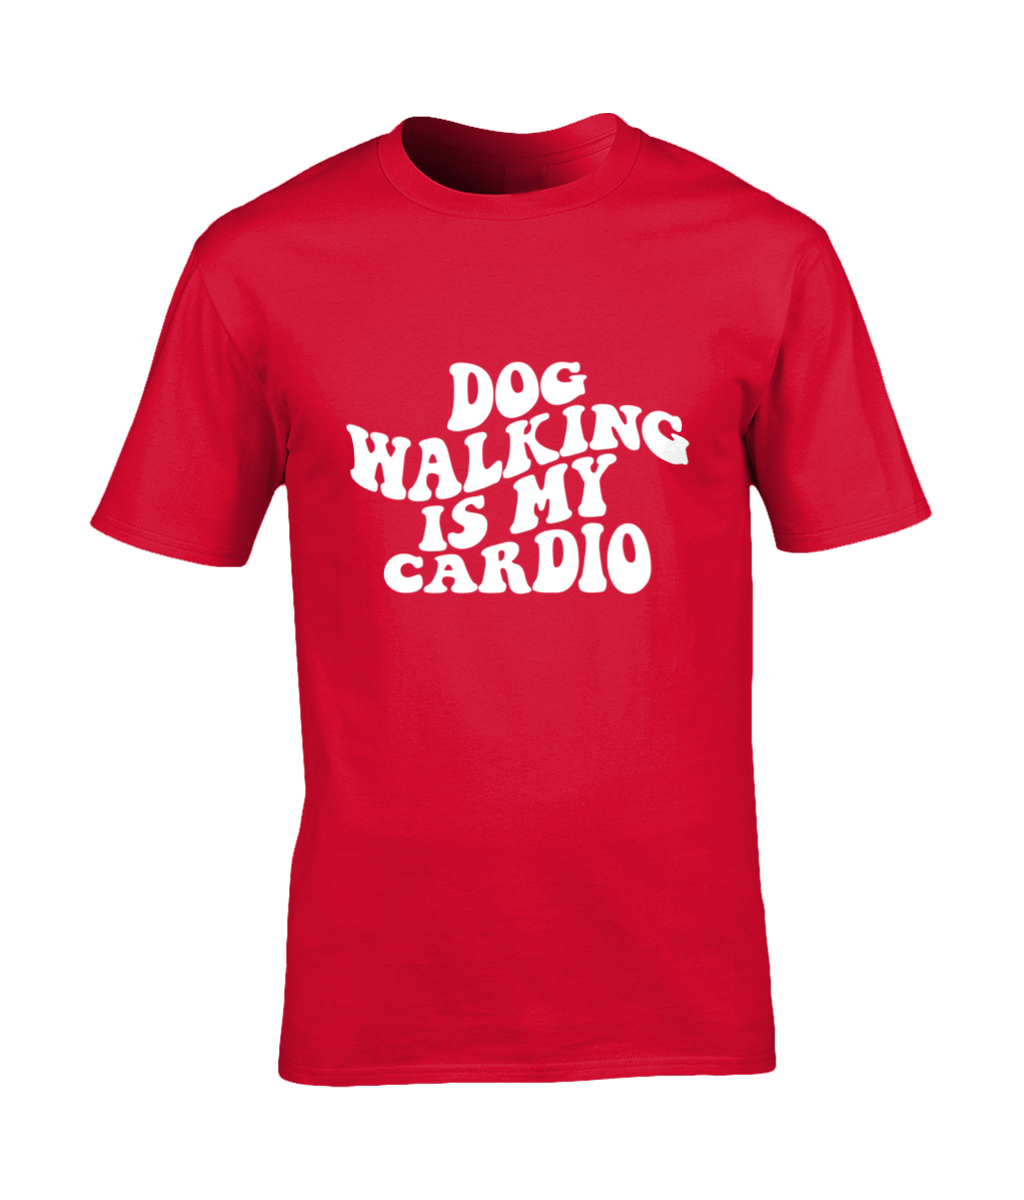 BMDR "Dog Walking is my Cardio" T-Shirt - Unisex